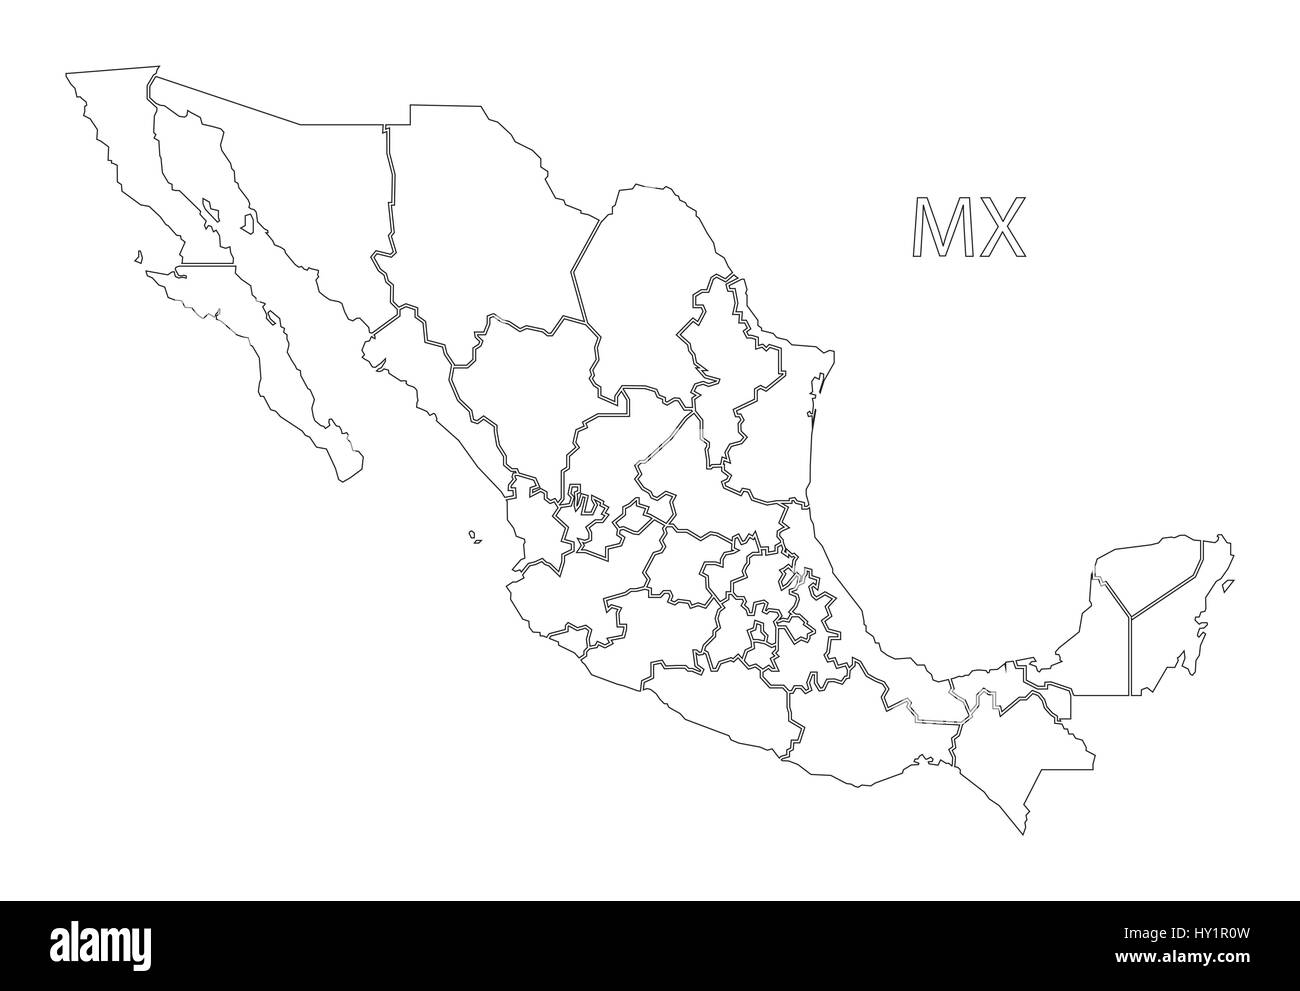 Mexiko Umriss Silhouette Karte Abbildung mit Staaten Stock Vektor